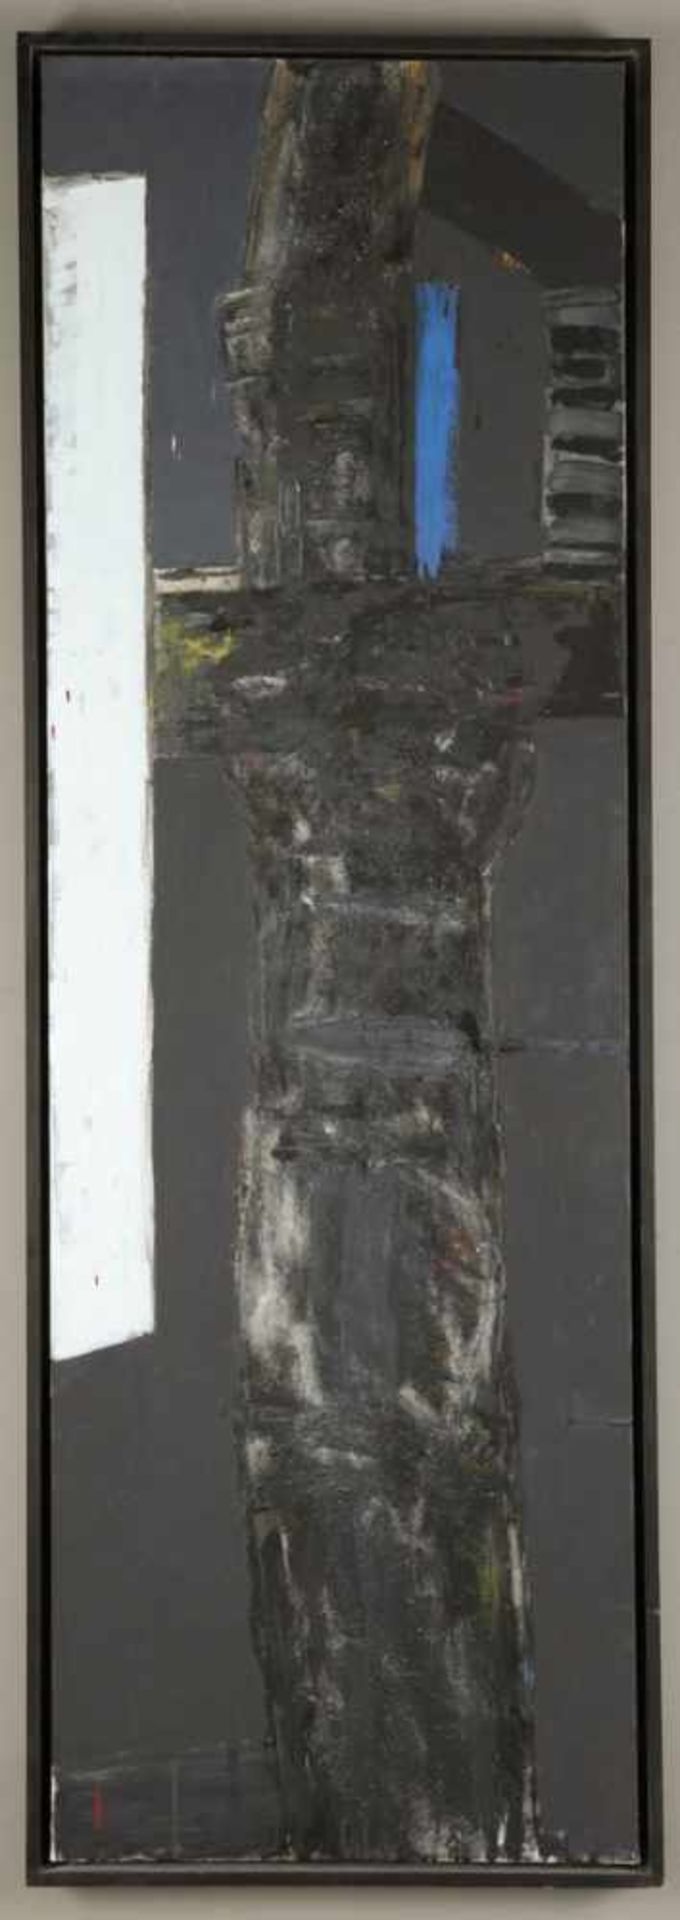 Burkhard Held1953 Berlin - "Fensterfigur III" - Öl/Lwd. 200 x 65 cm. Rückseitig sign., betit. und